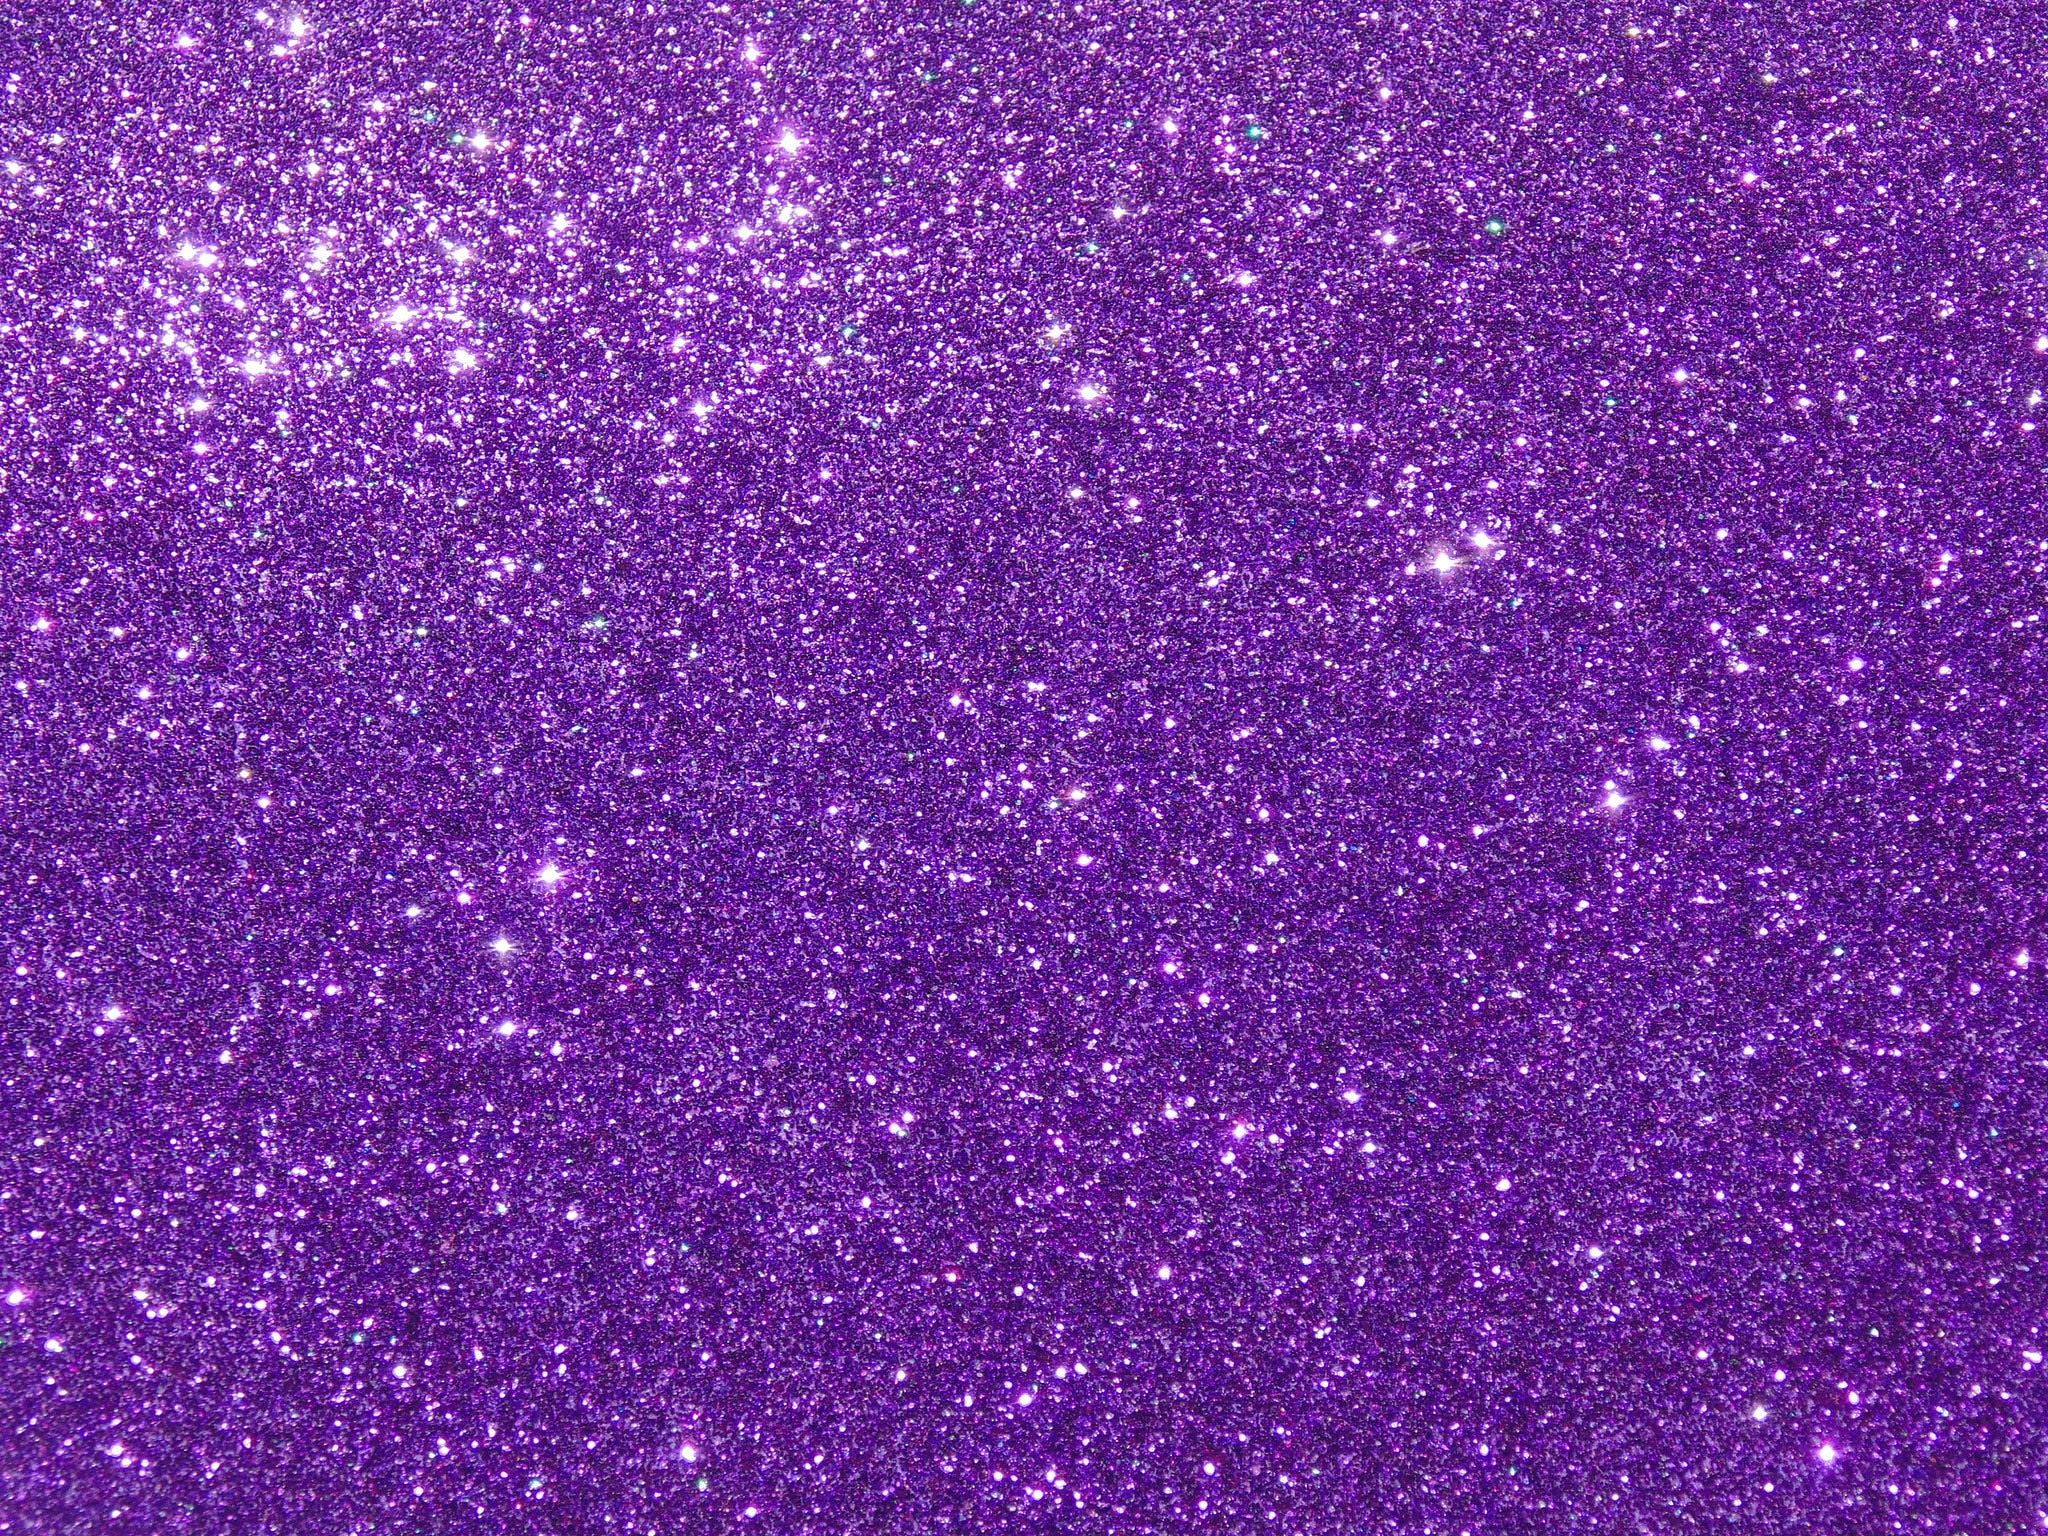 FREE Glitter Background in PSD